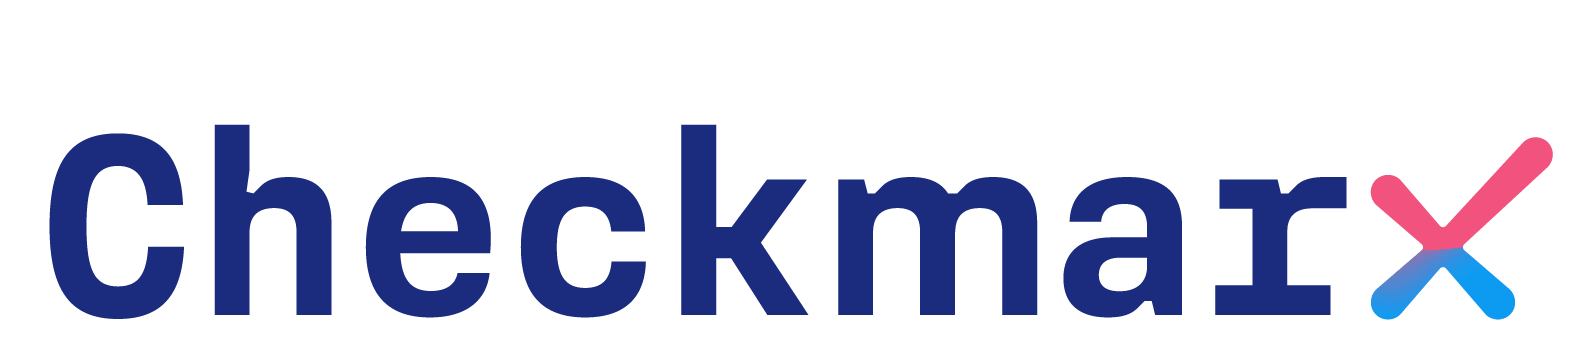 Checkmarx logo 2019 horizontal